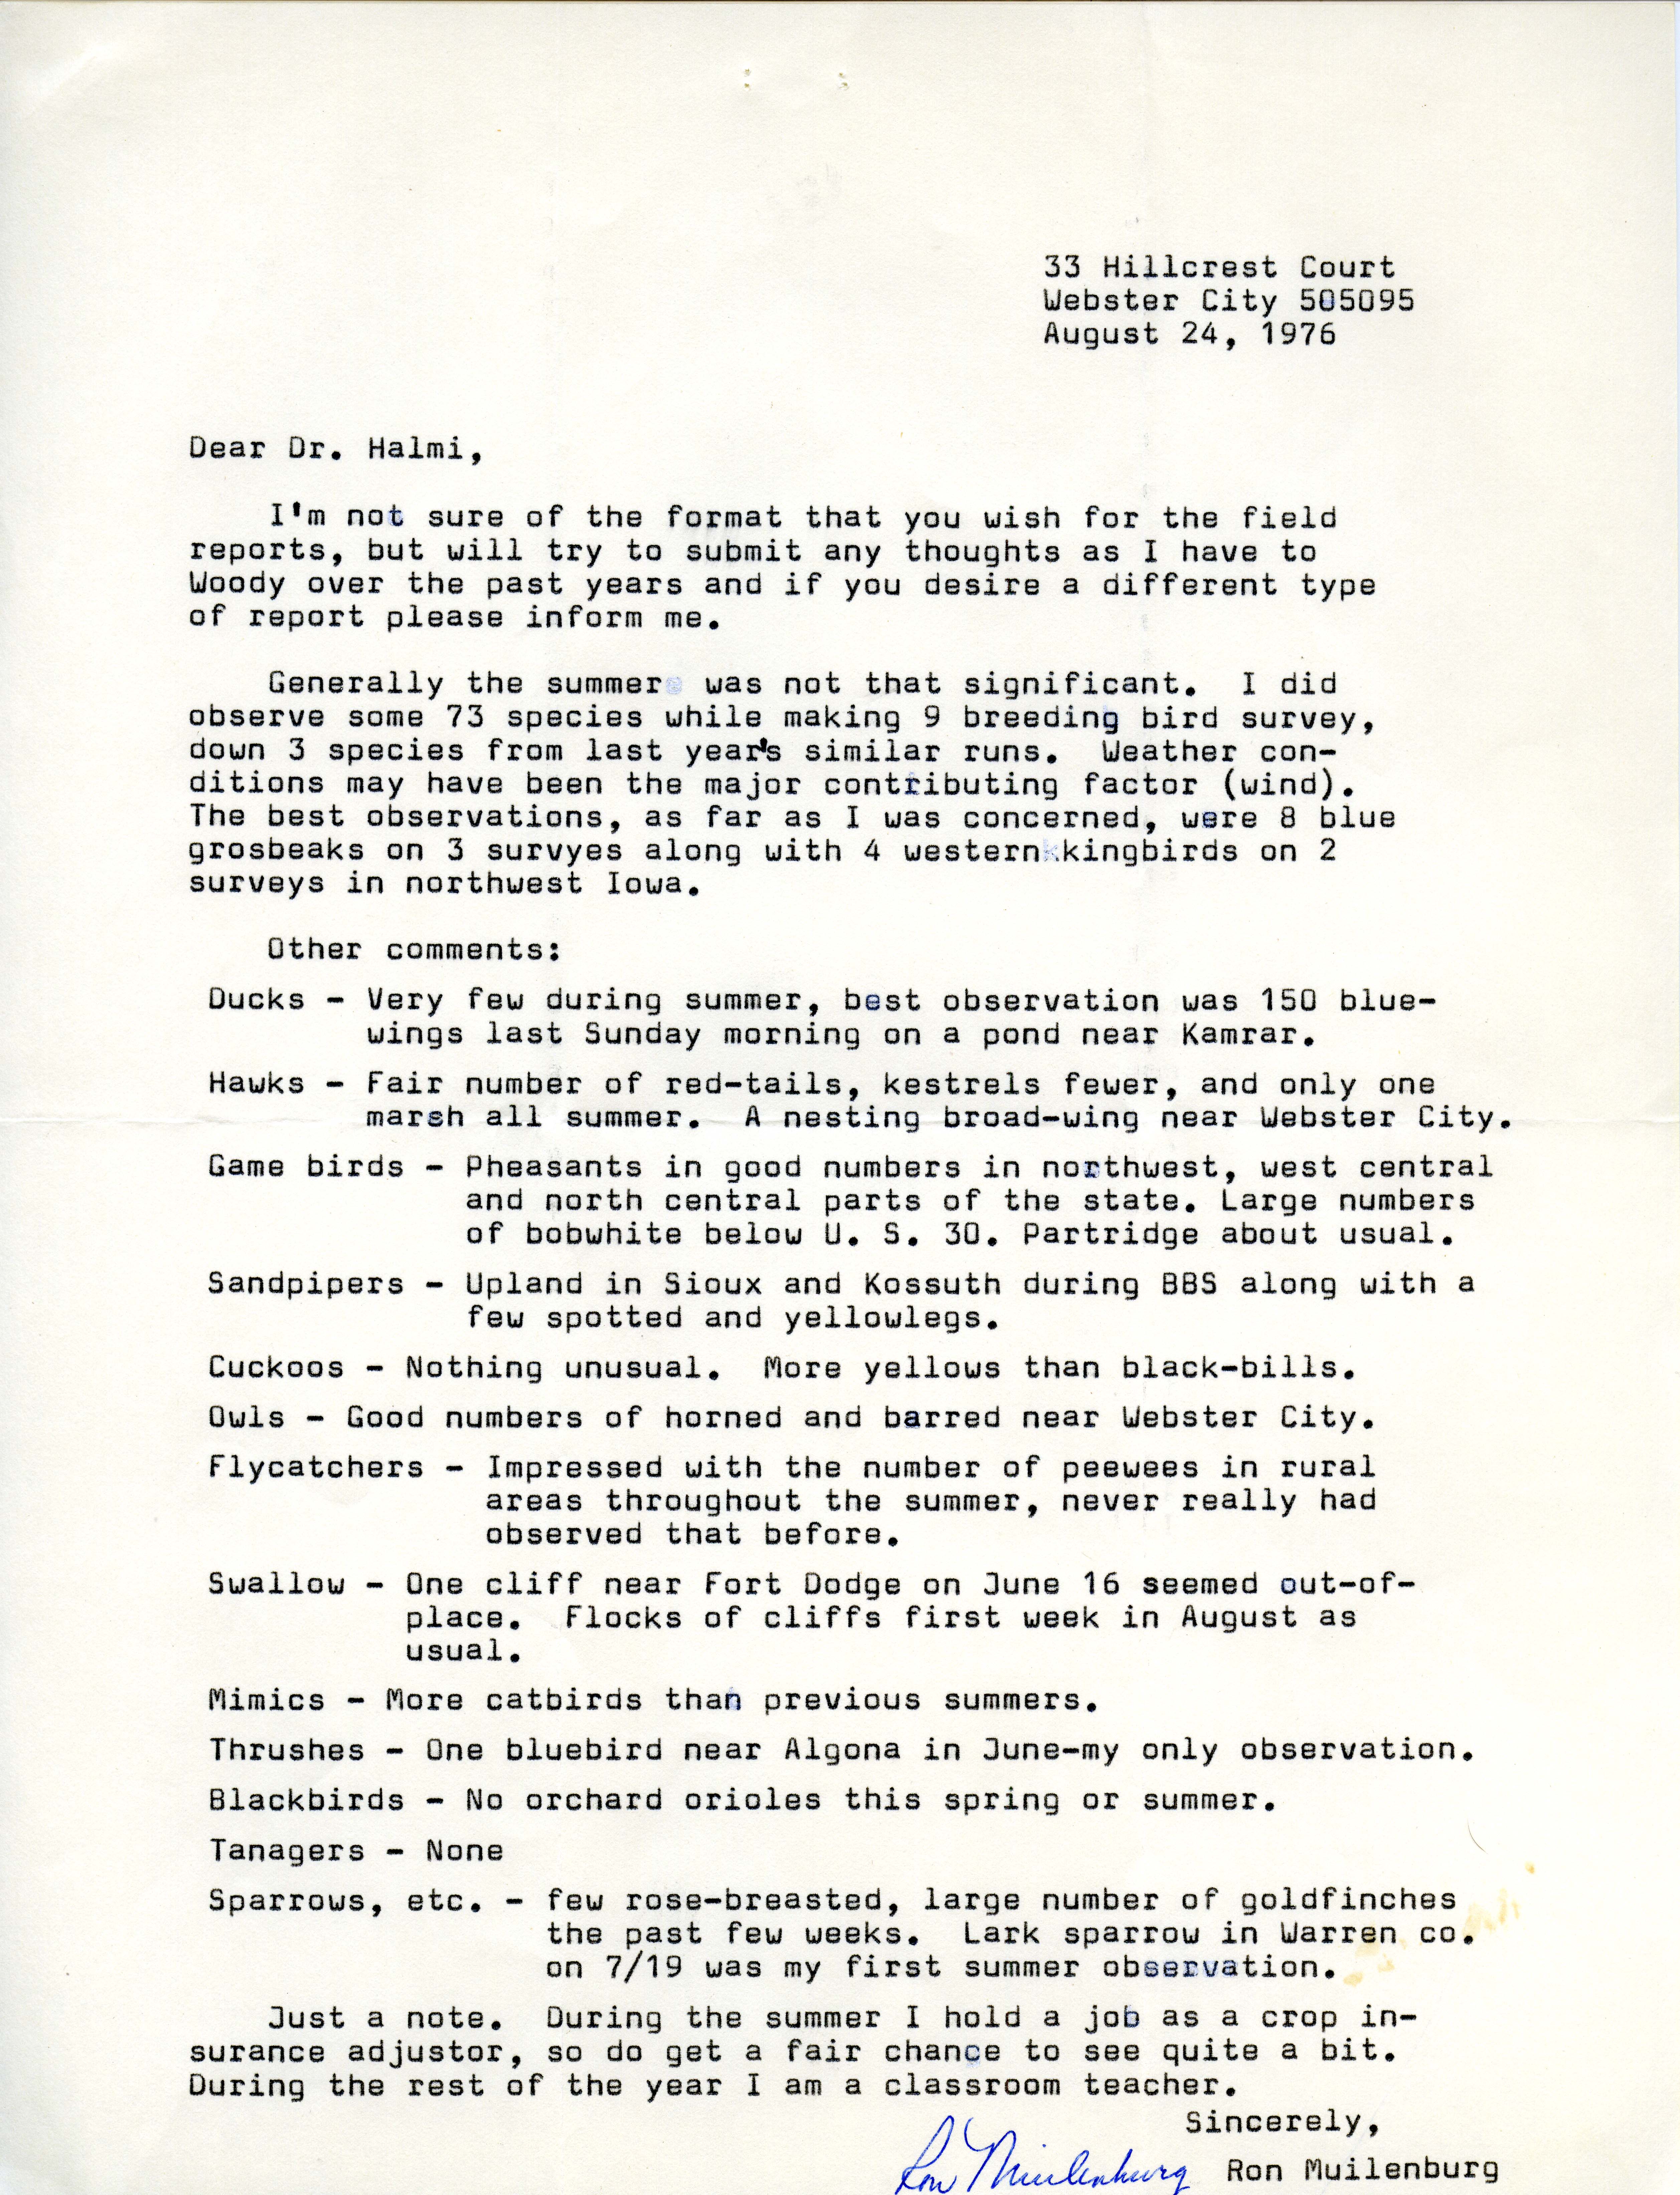 Ron Muilenburg letter to Nicholas S. Halmi regarding fall migration, 1976